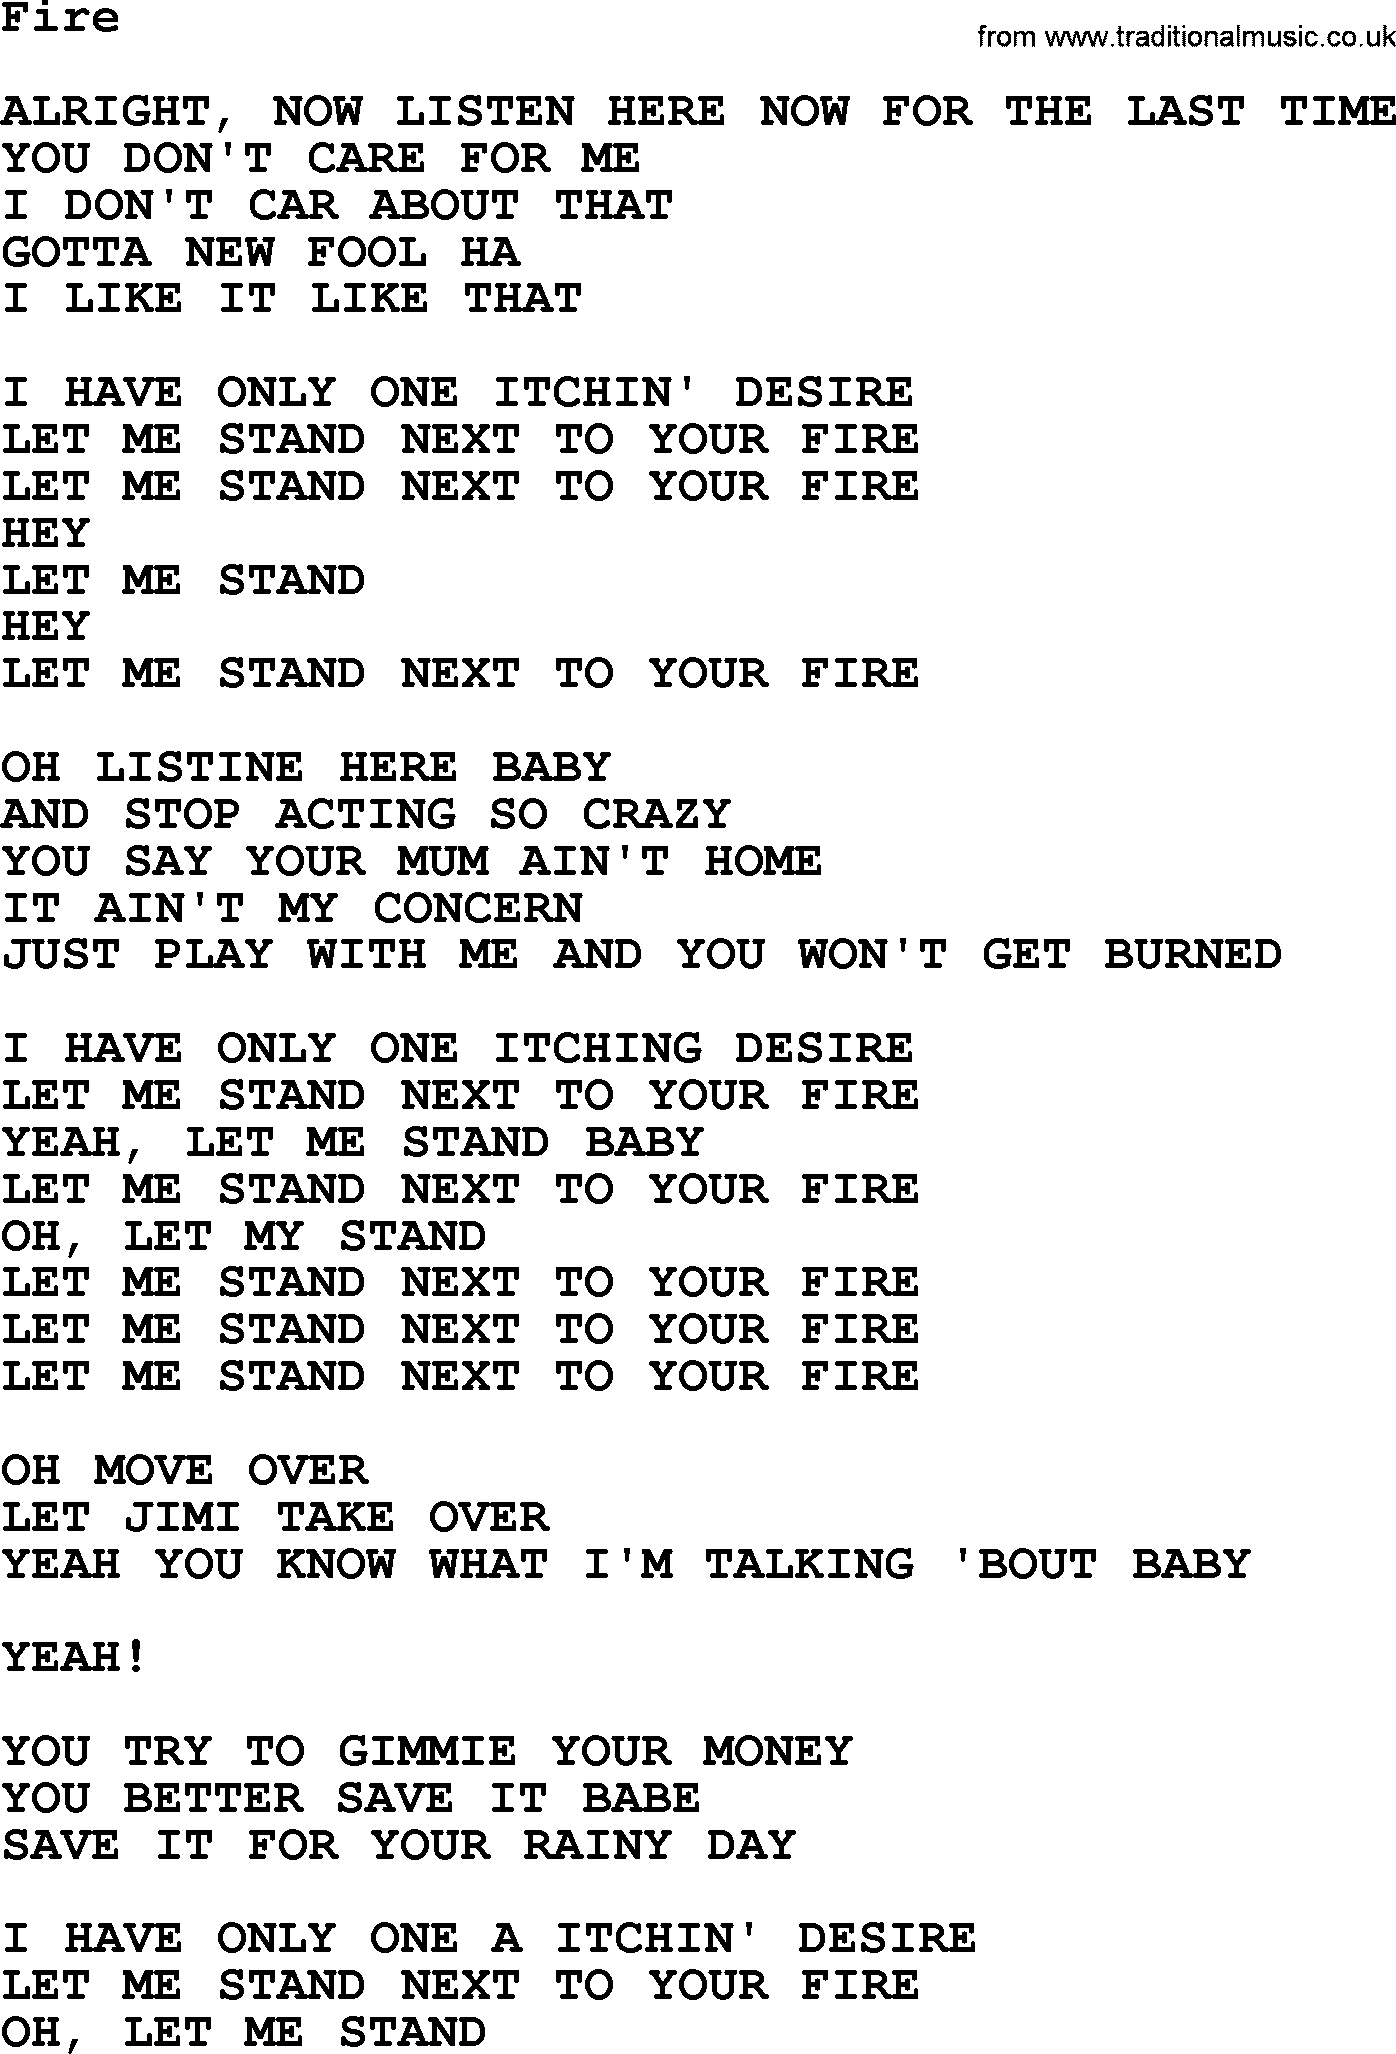 The Byrds song Fire, lyrics